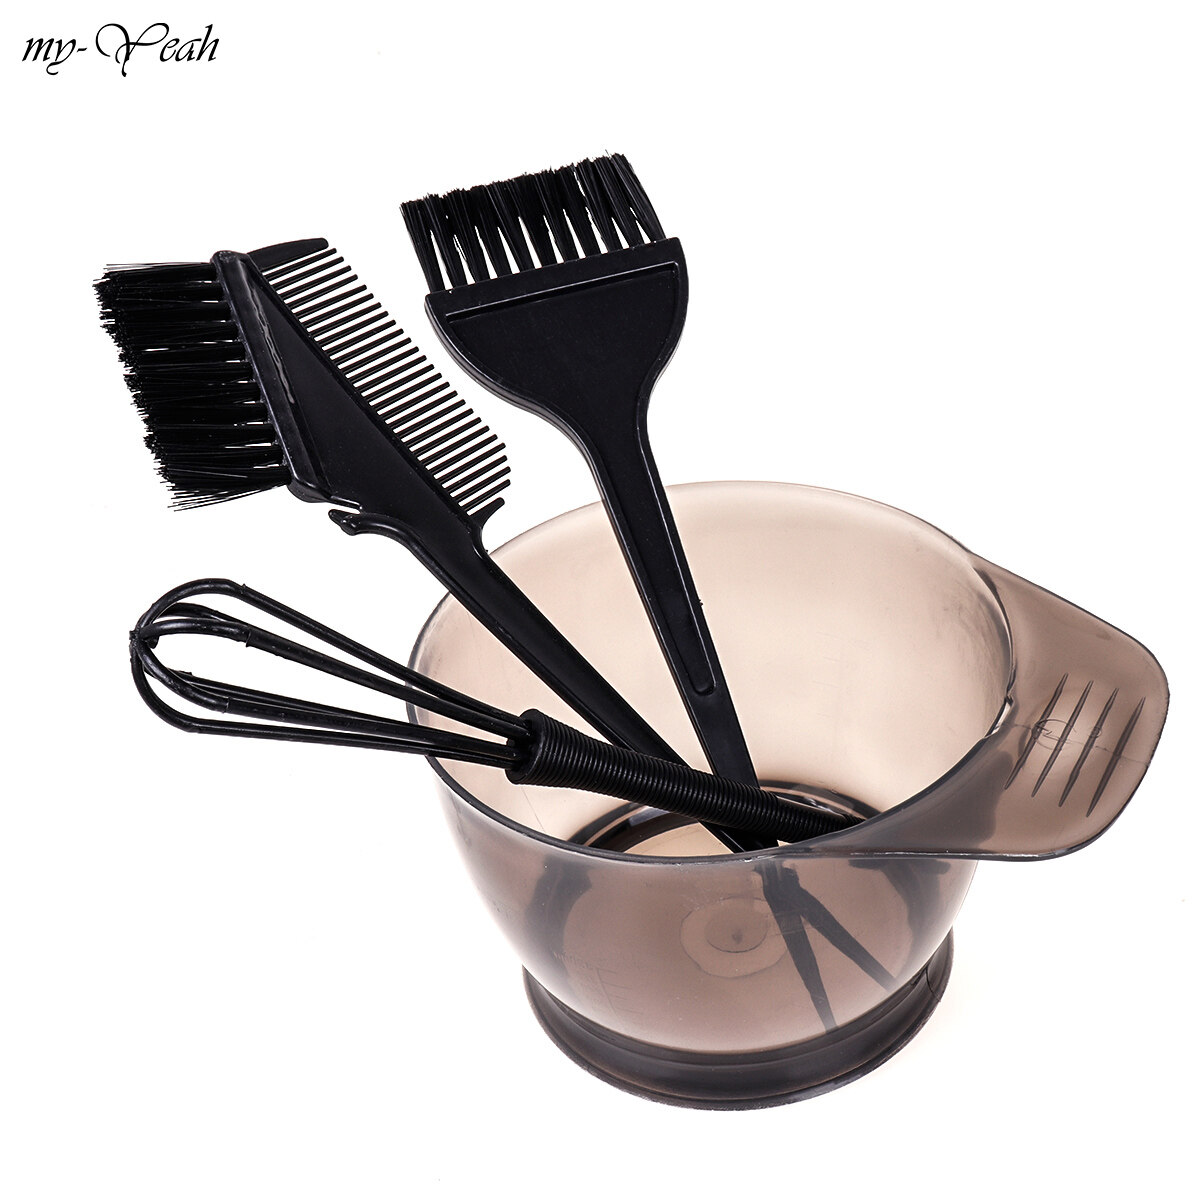 myyeah 5pcs/set Hair Bowl Comb Brushes Tools Hair Color Mixer Barber Salon Tint Hairdressing Styling Set DIY Home-Black